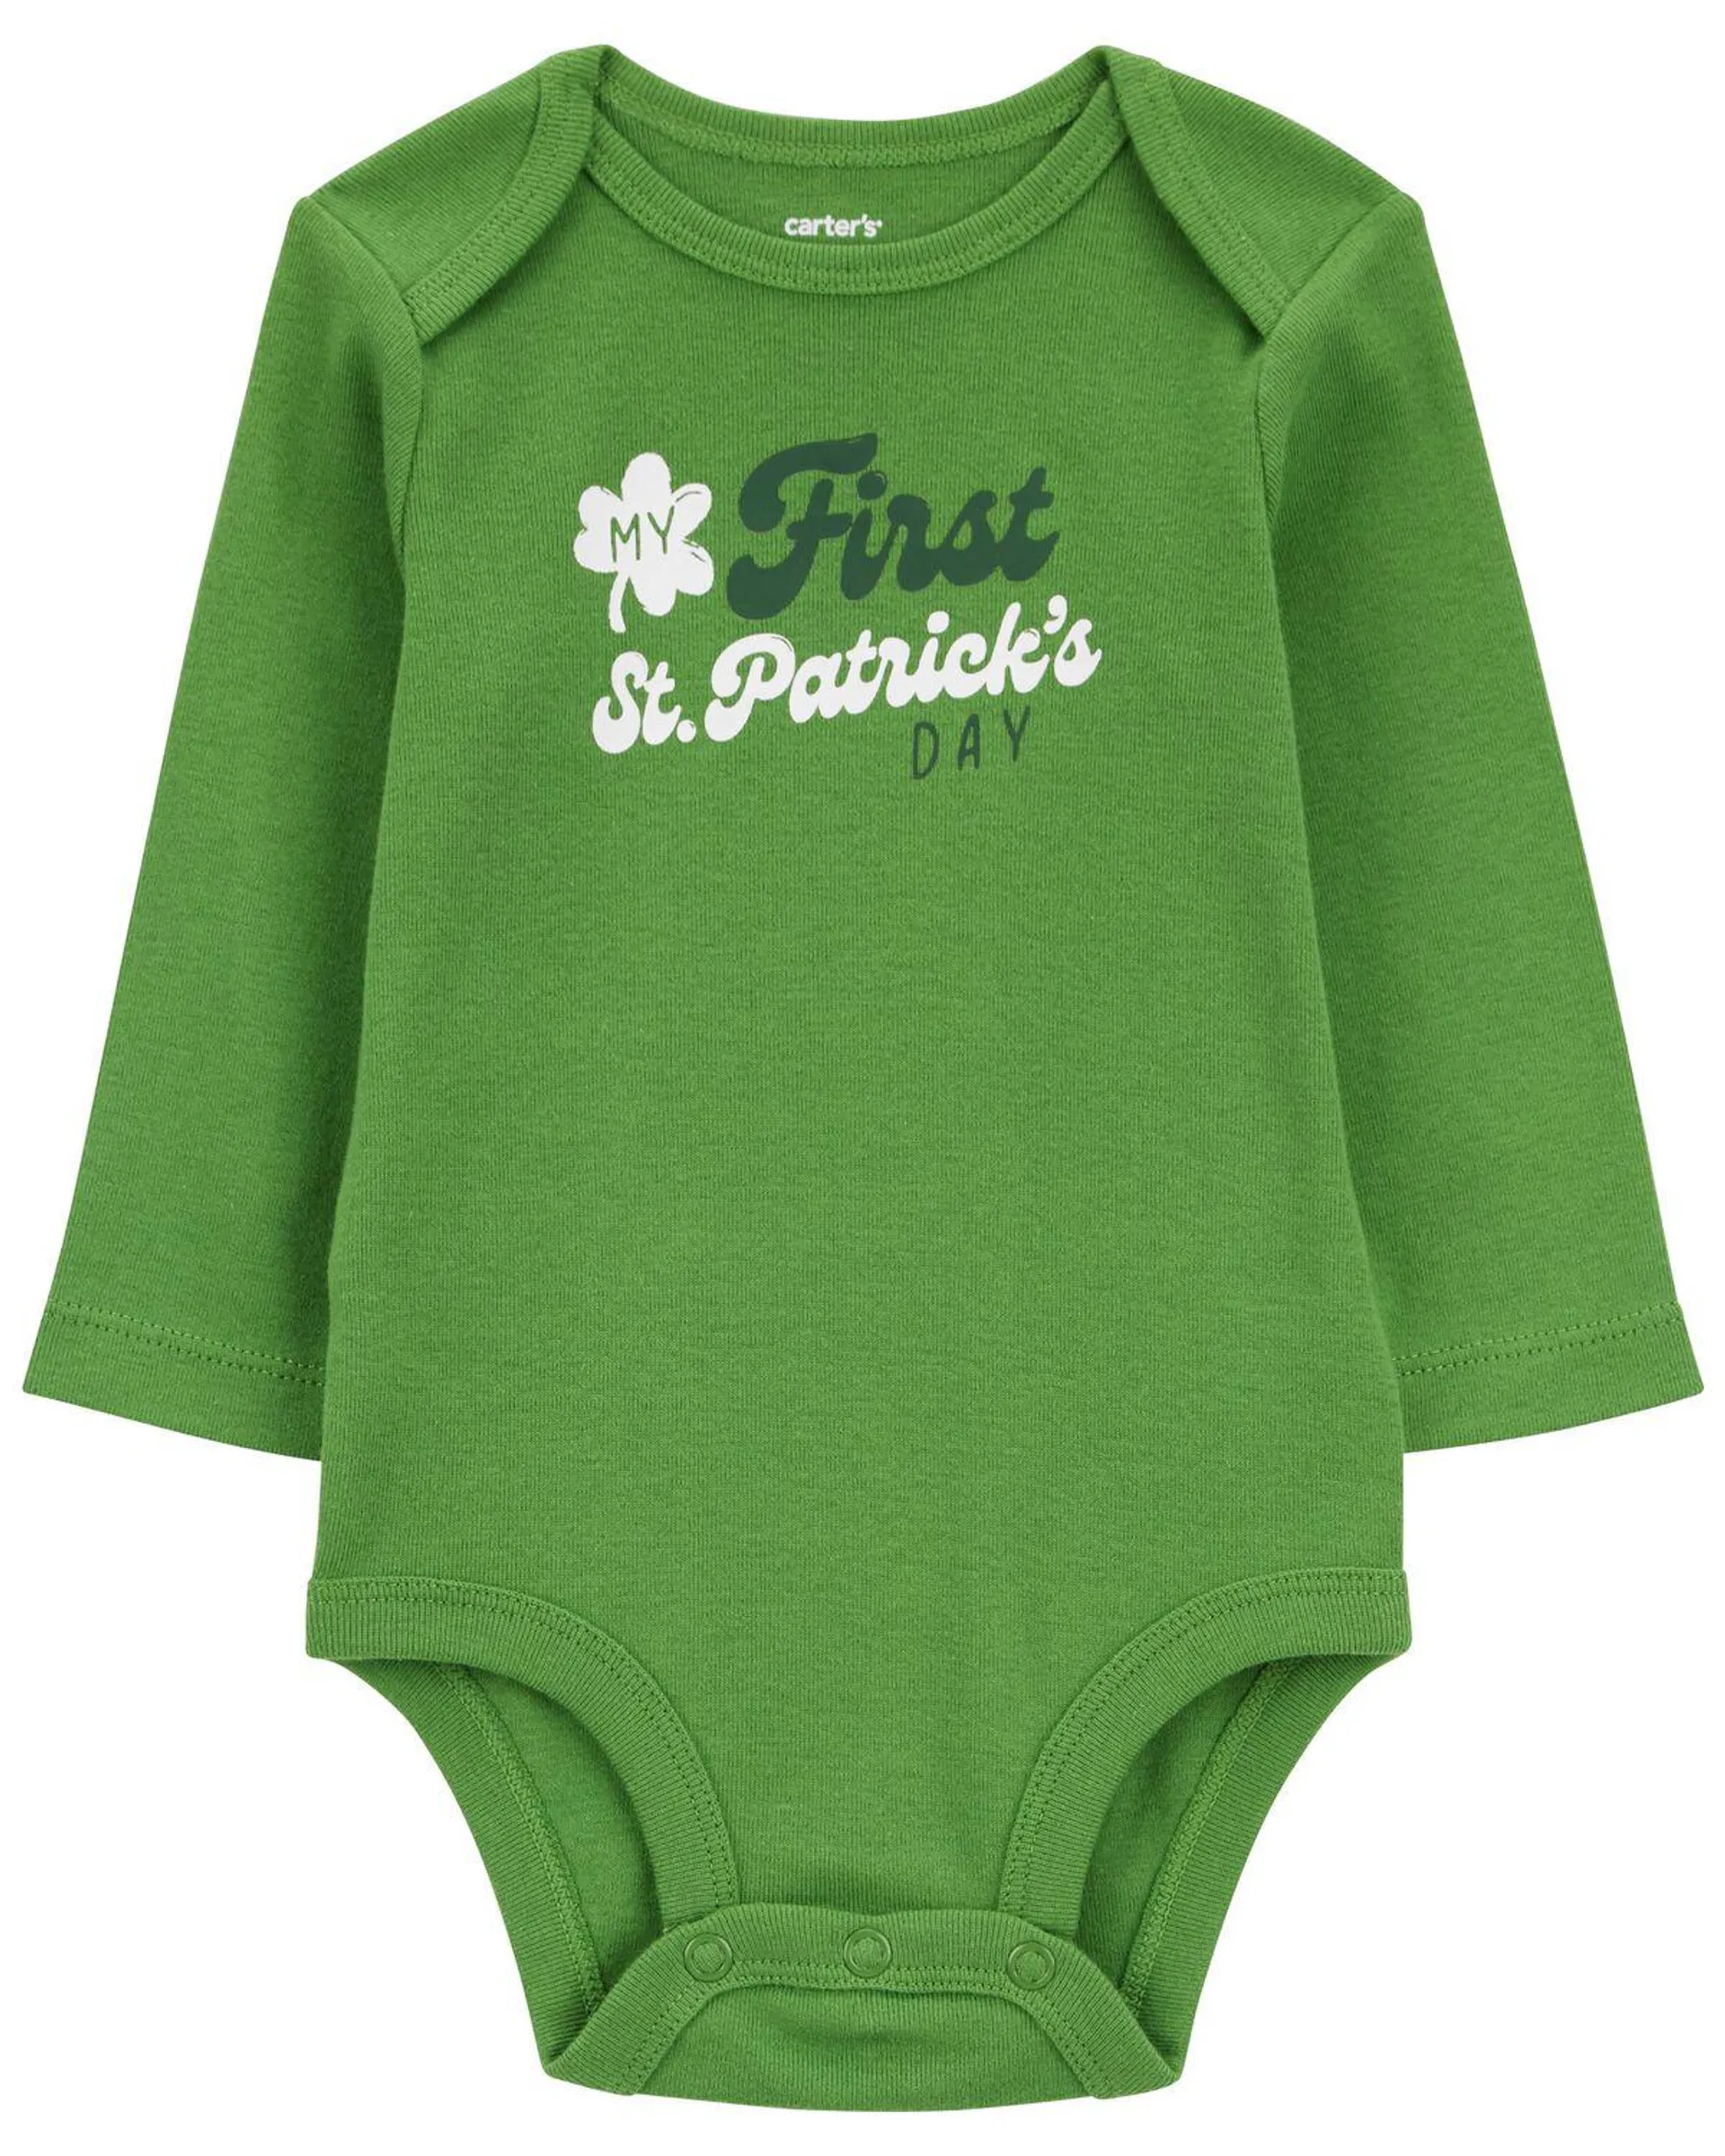 Baby First St. Patrick's Day Bodysuit